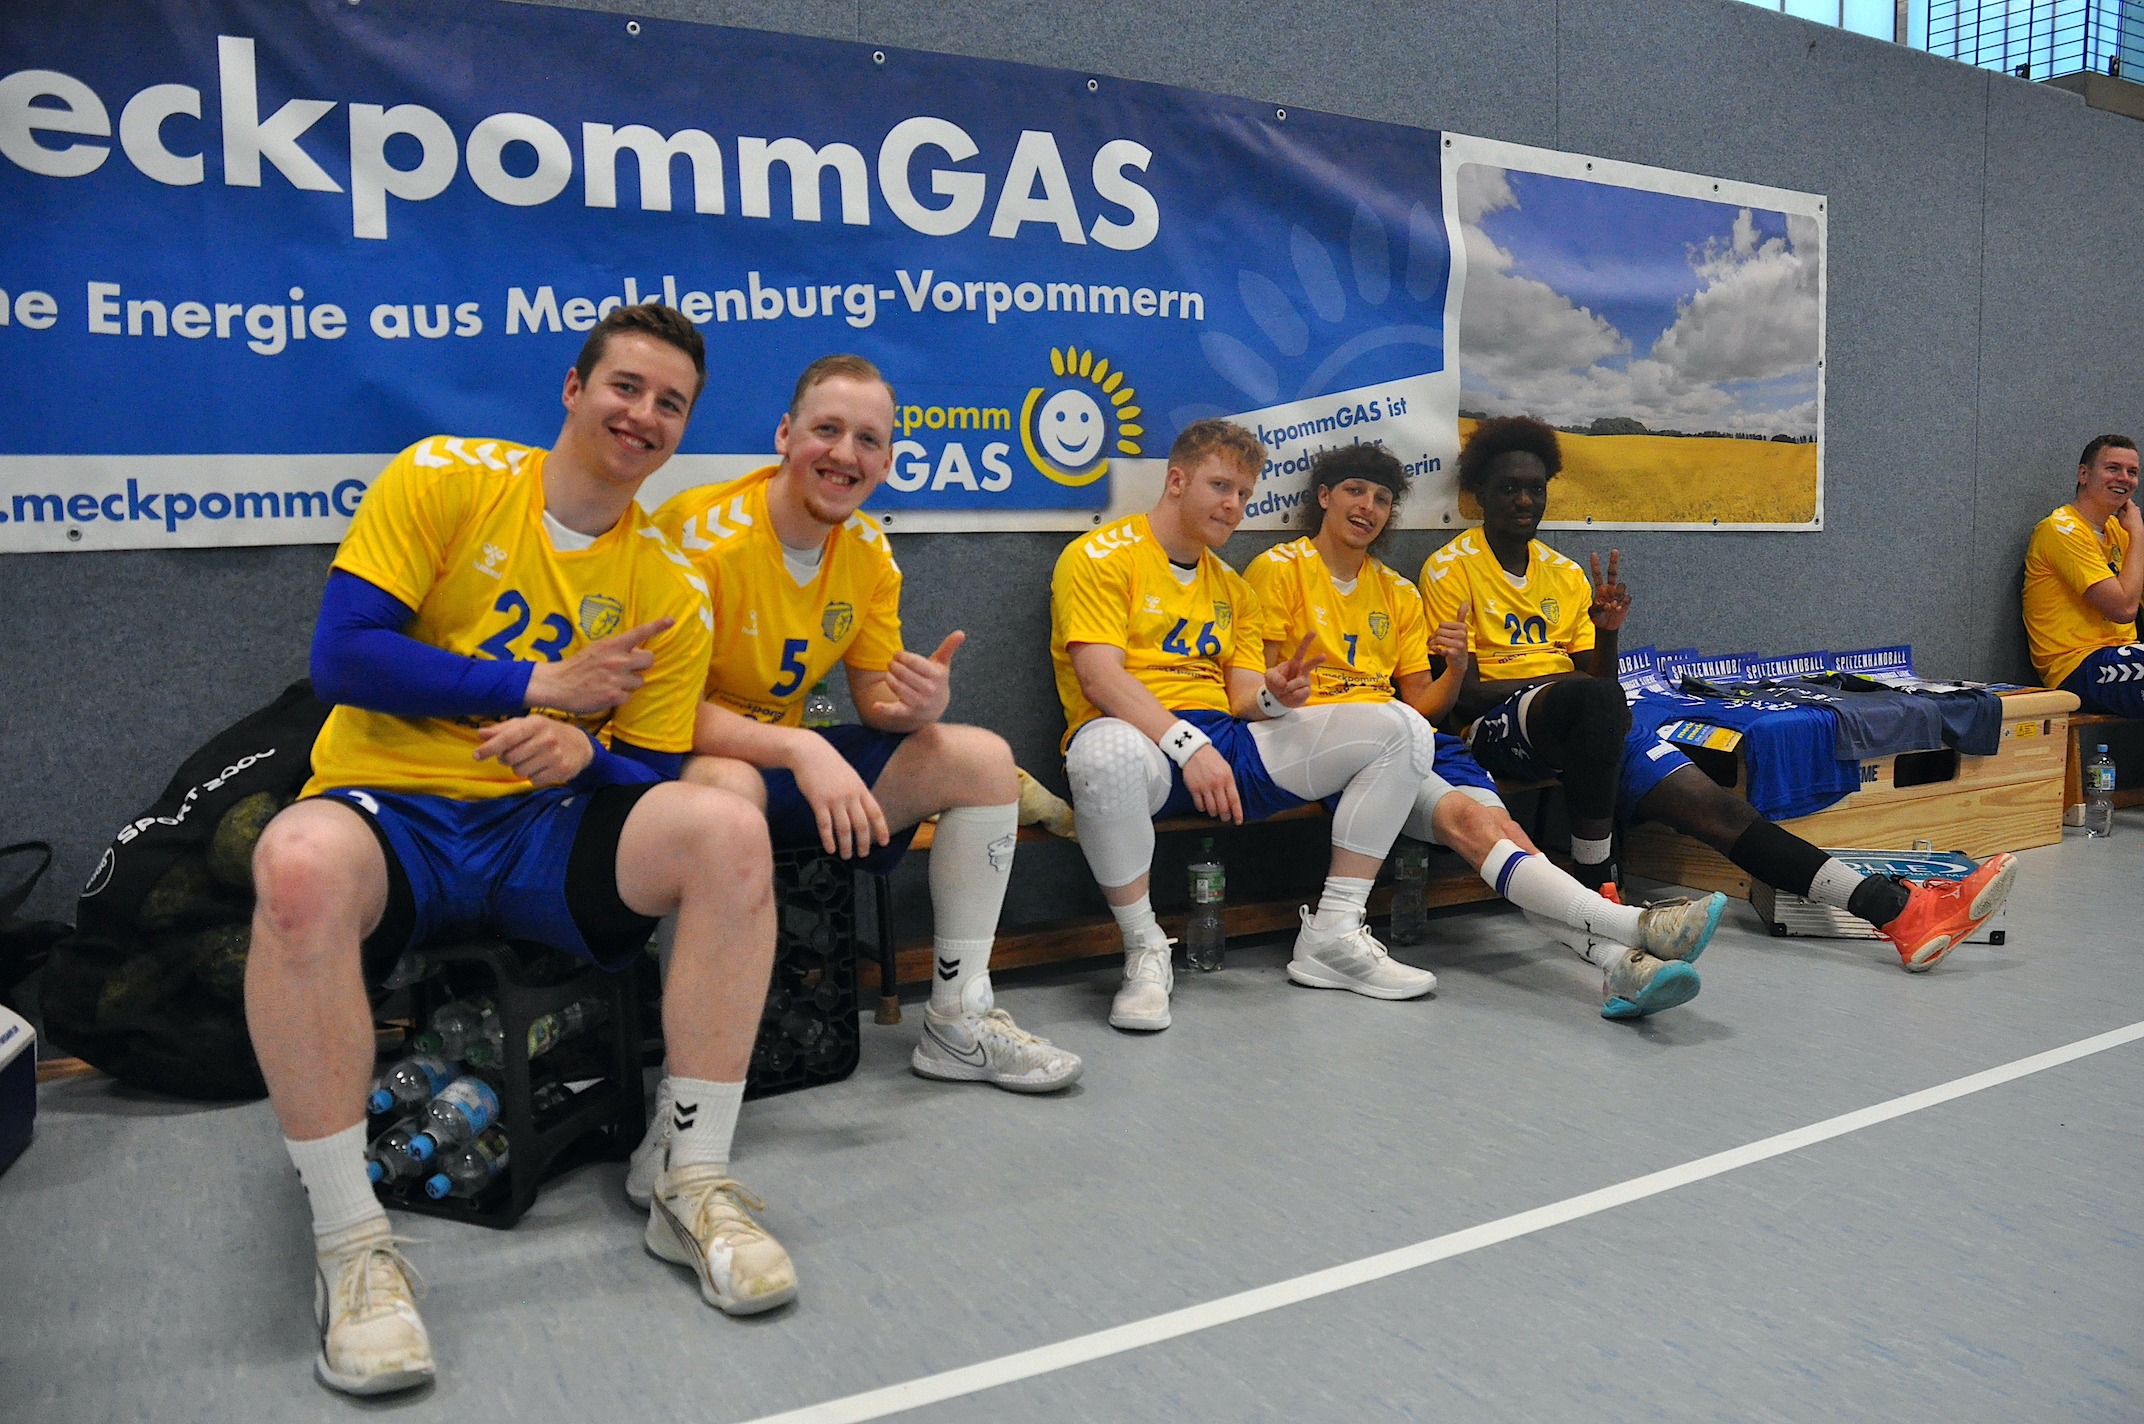 meckpommGAS-Tour zuende: Handballfest am Finkenkamp begeistert Fans 